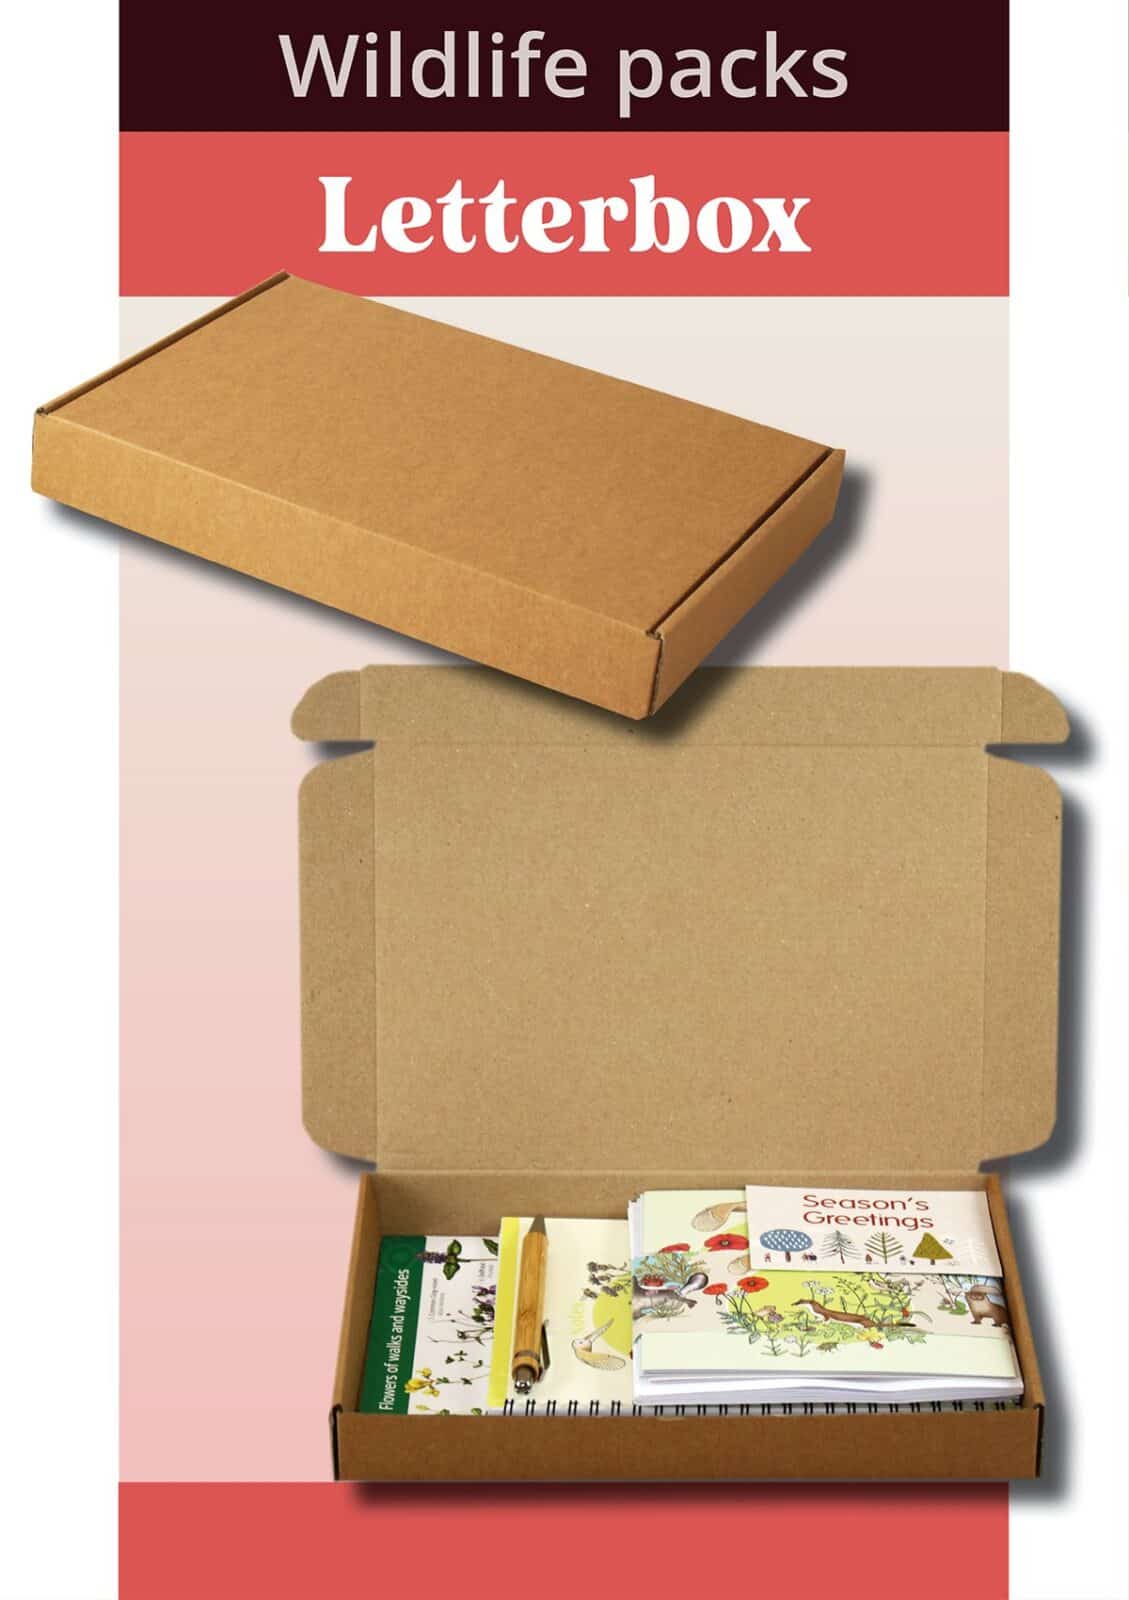 letterbox wildlife pack